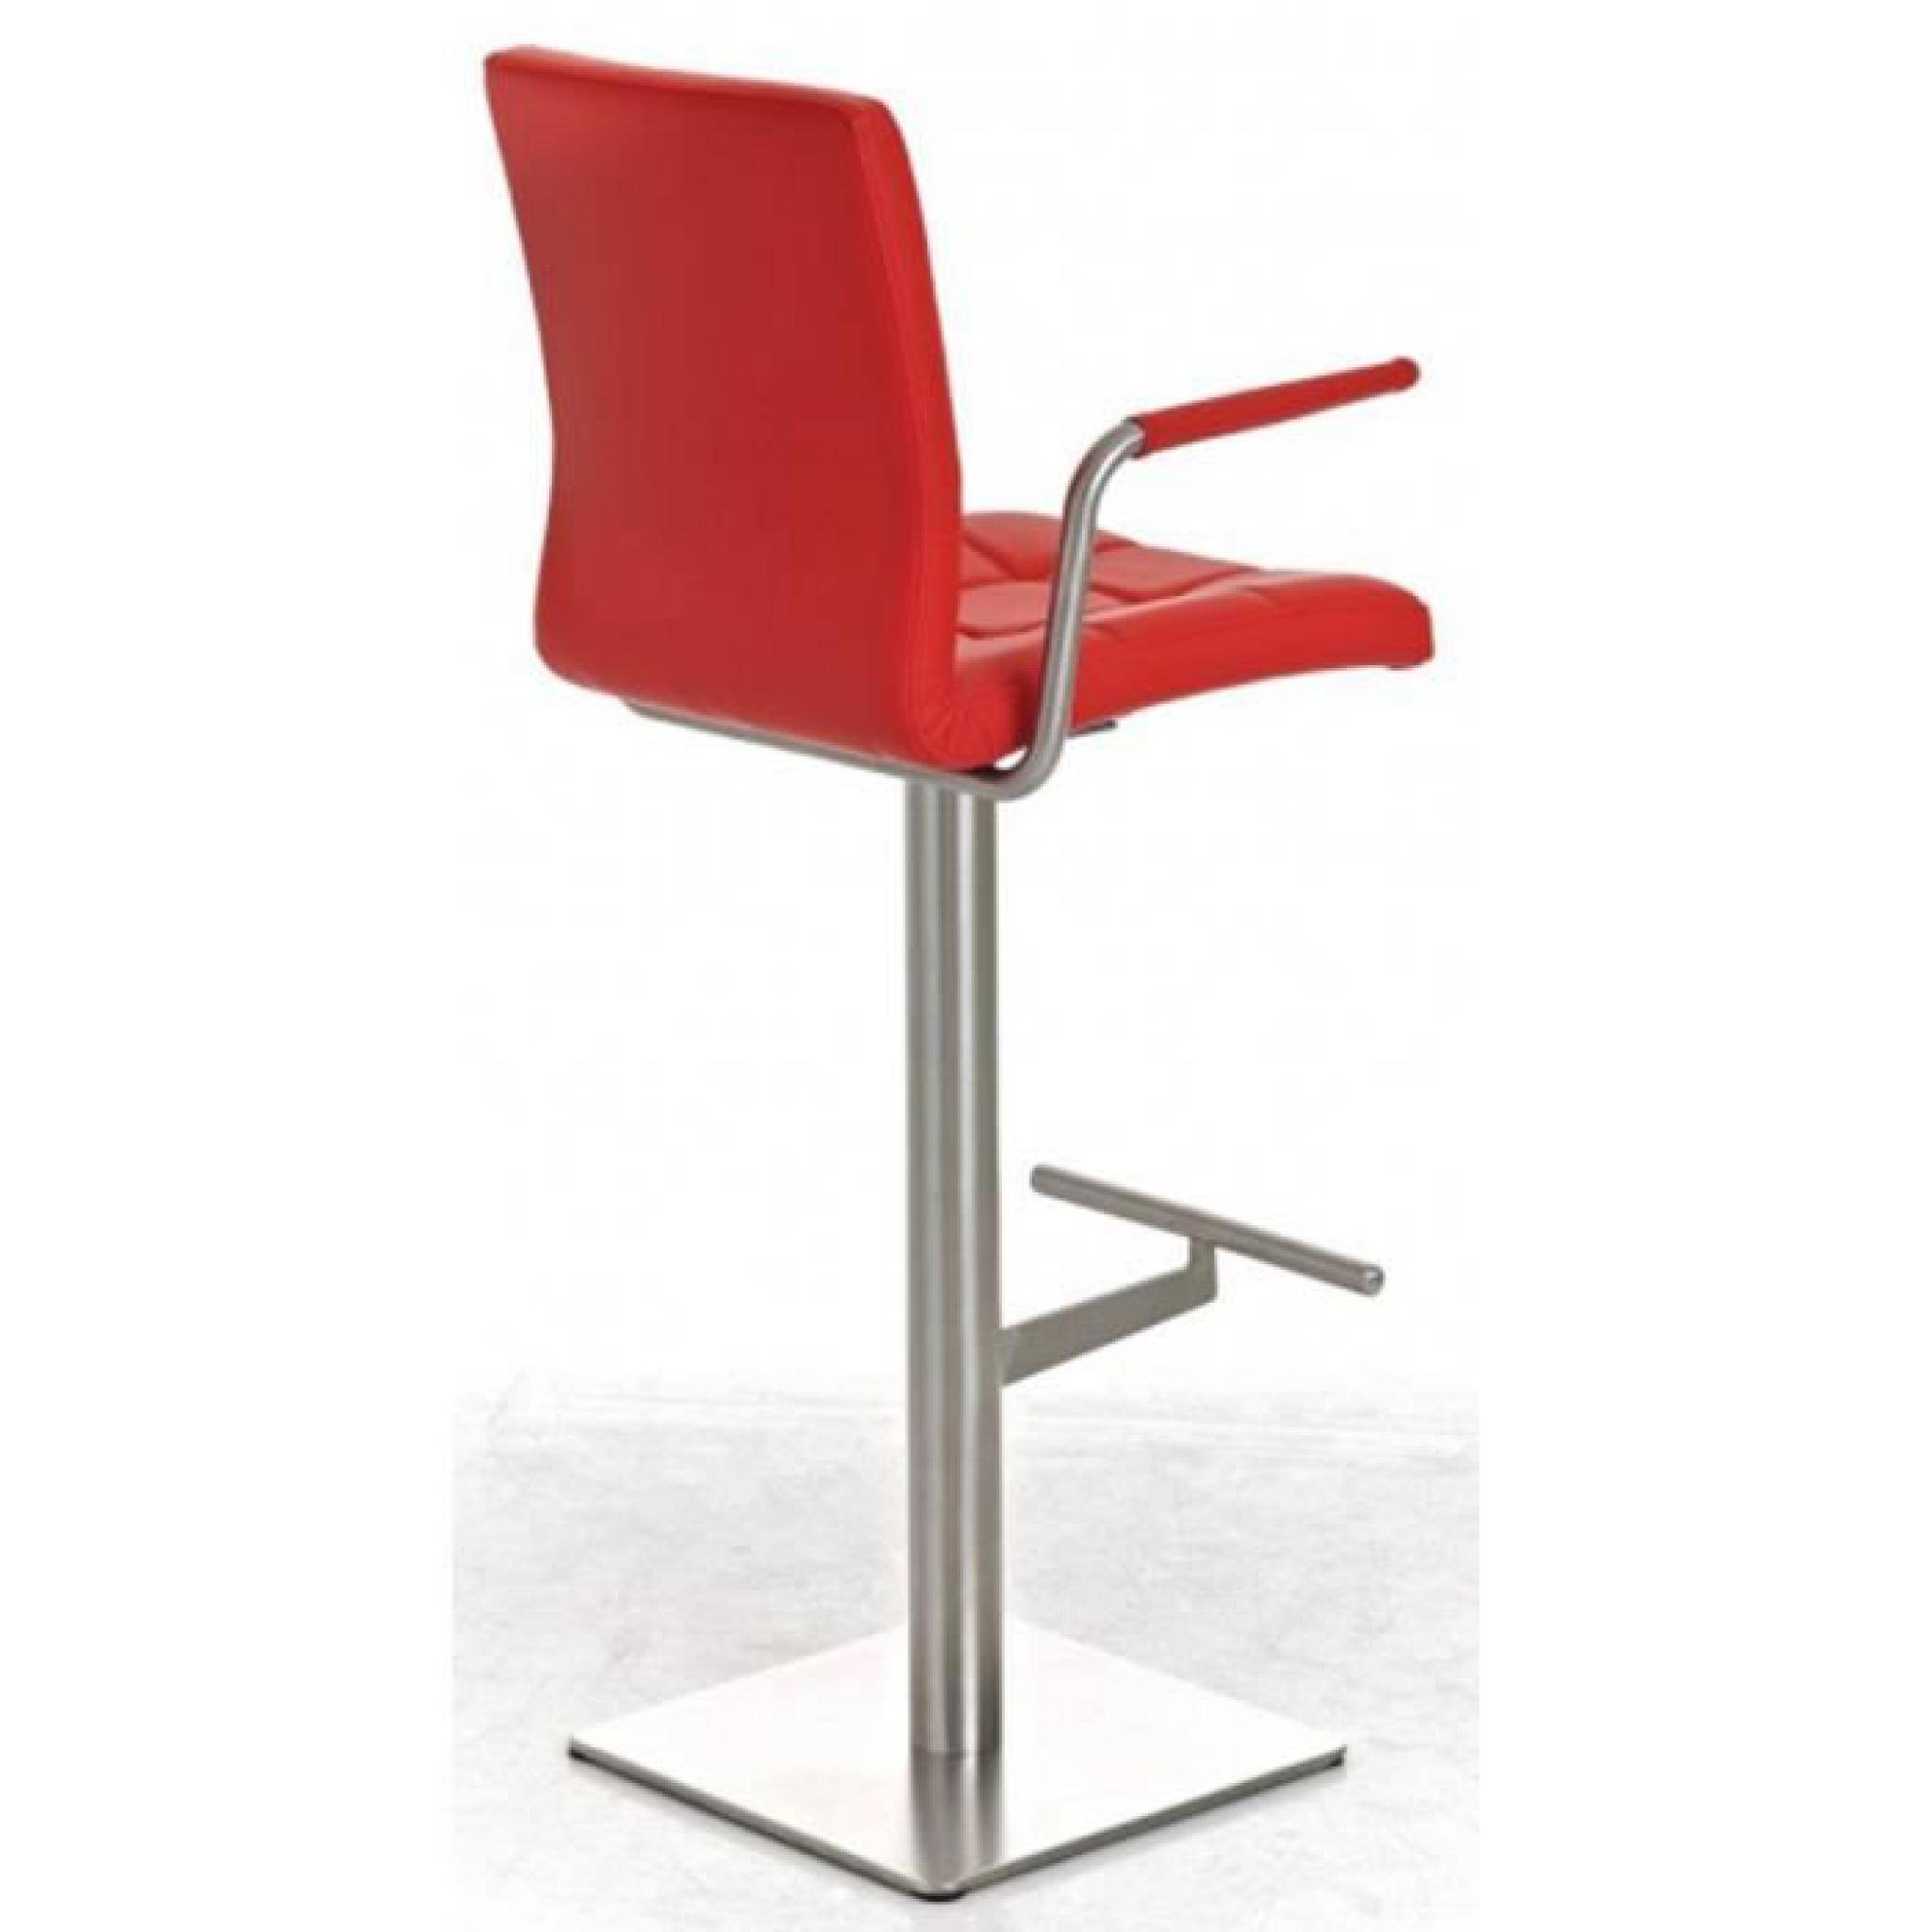 Chaise de bar en acier inoxydable et couverture en cuir de couleur rouge, H 115 x L 45 x P 53 cm pas cher